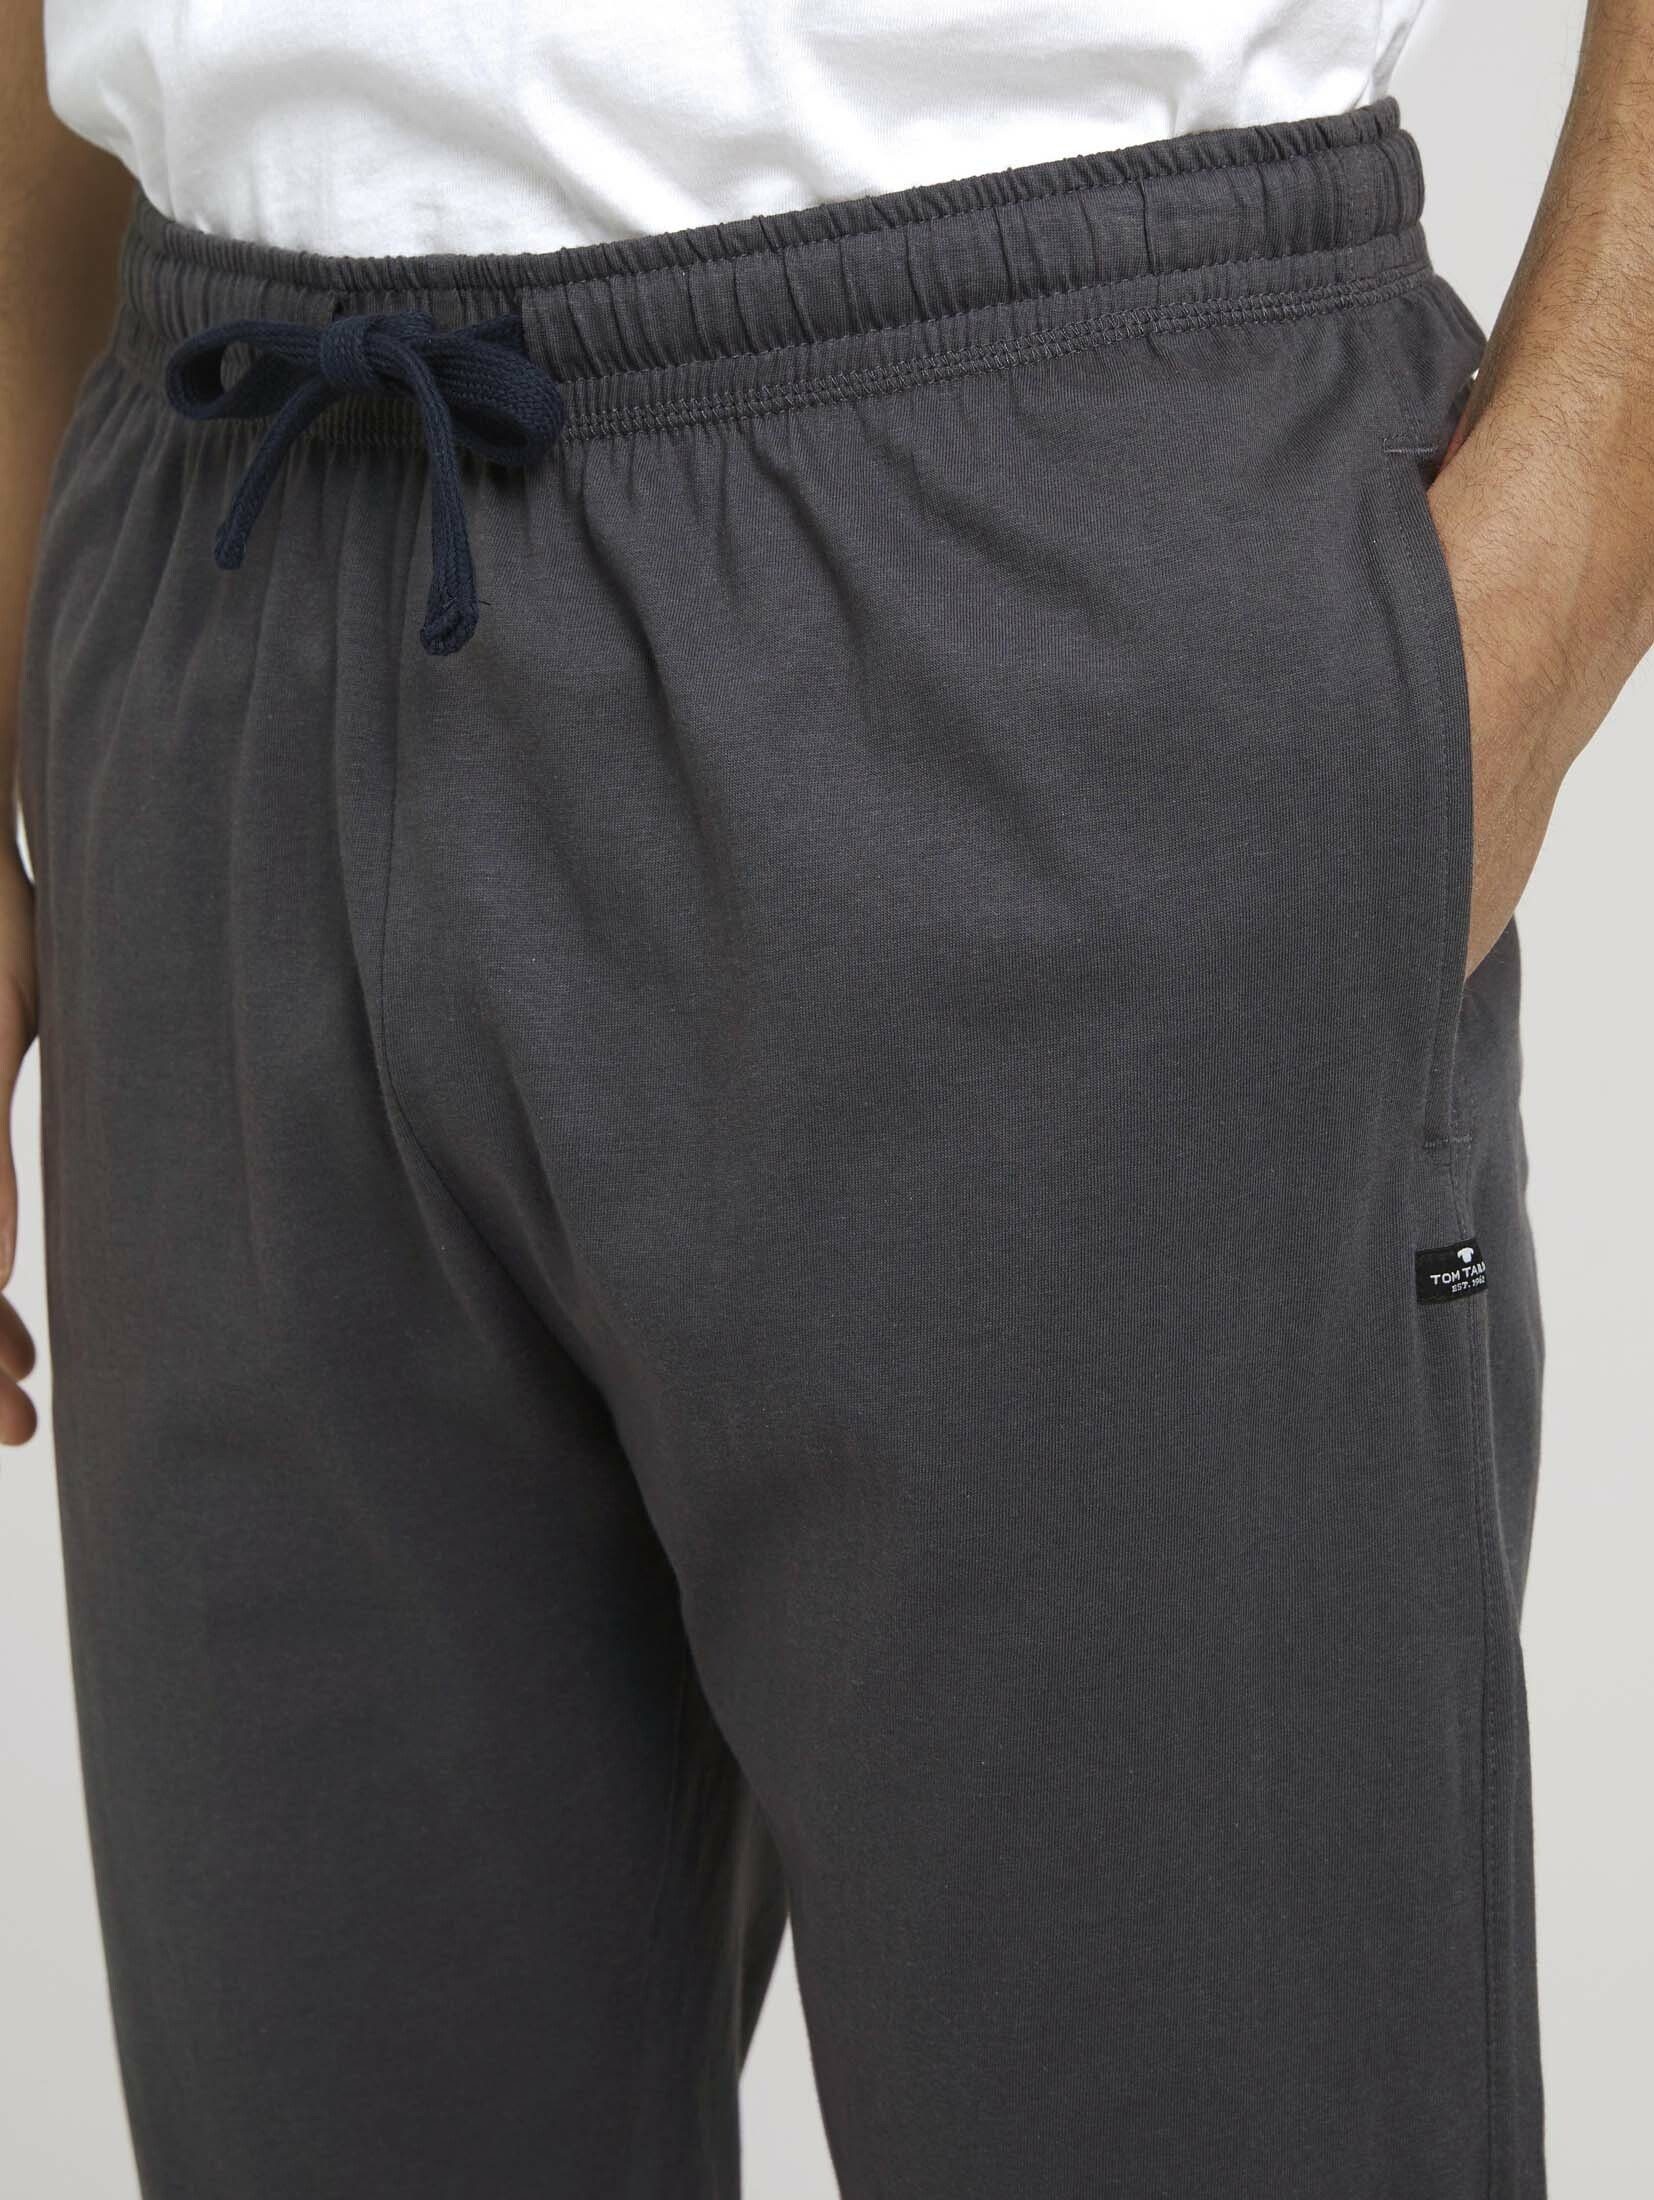 TOM TAILOR grey-dark-solid Schlafhose Pyjama Hose